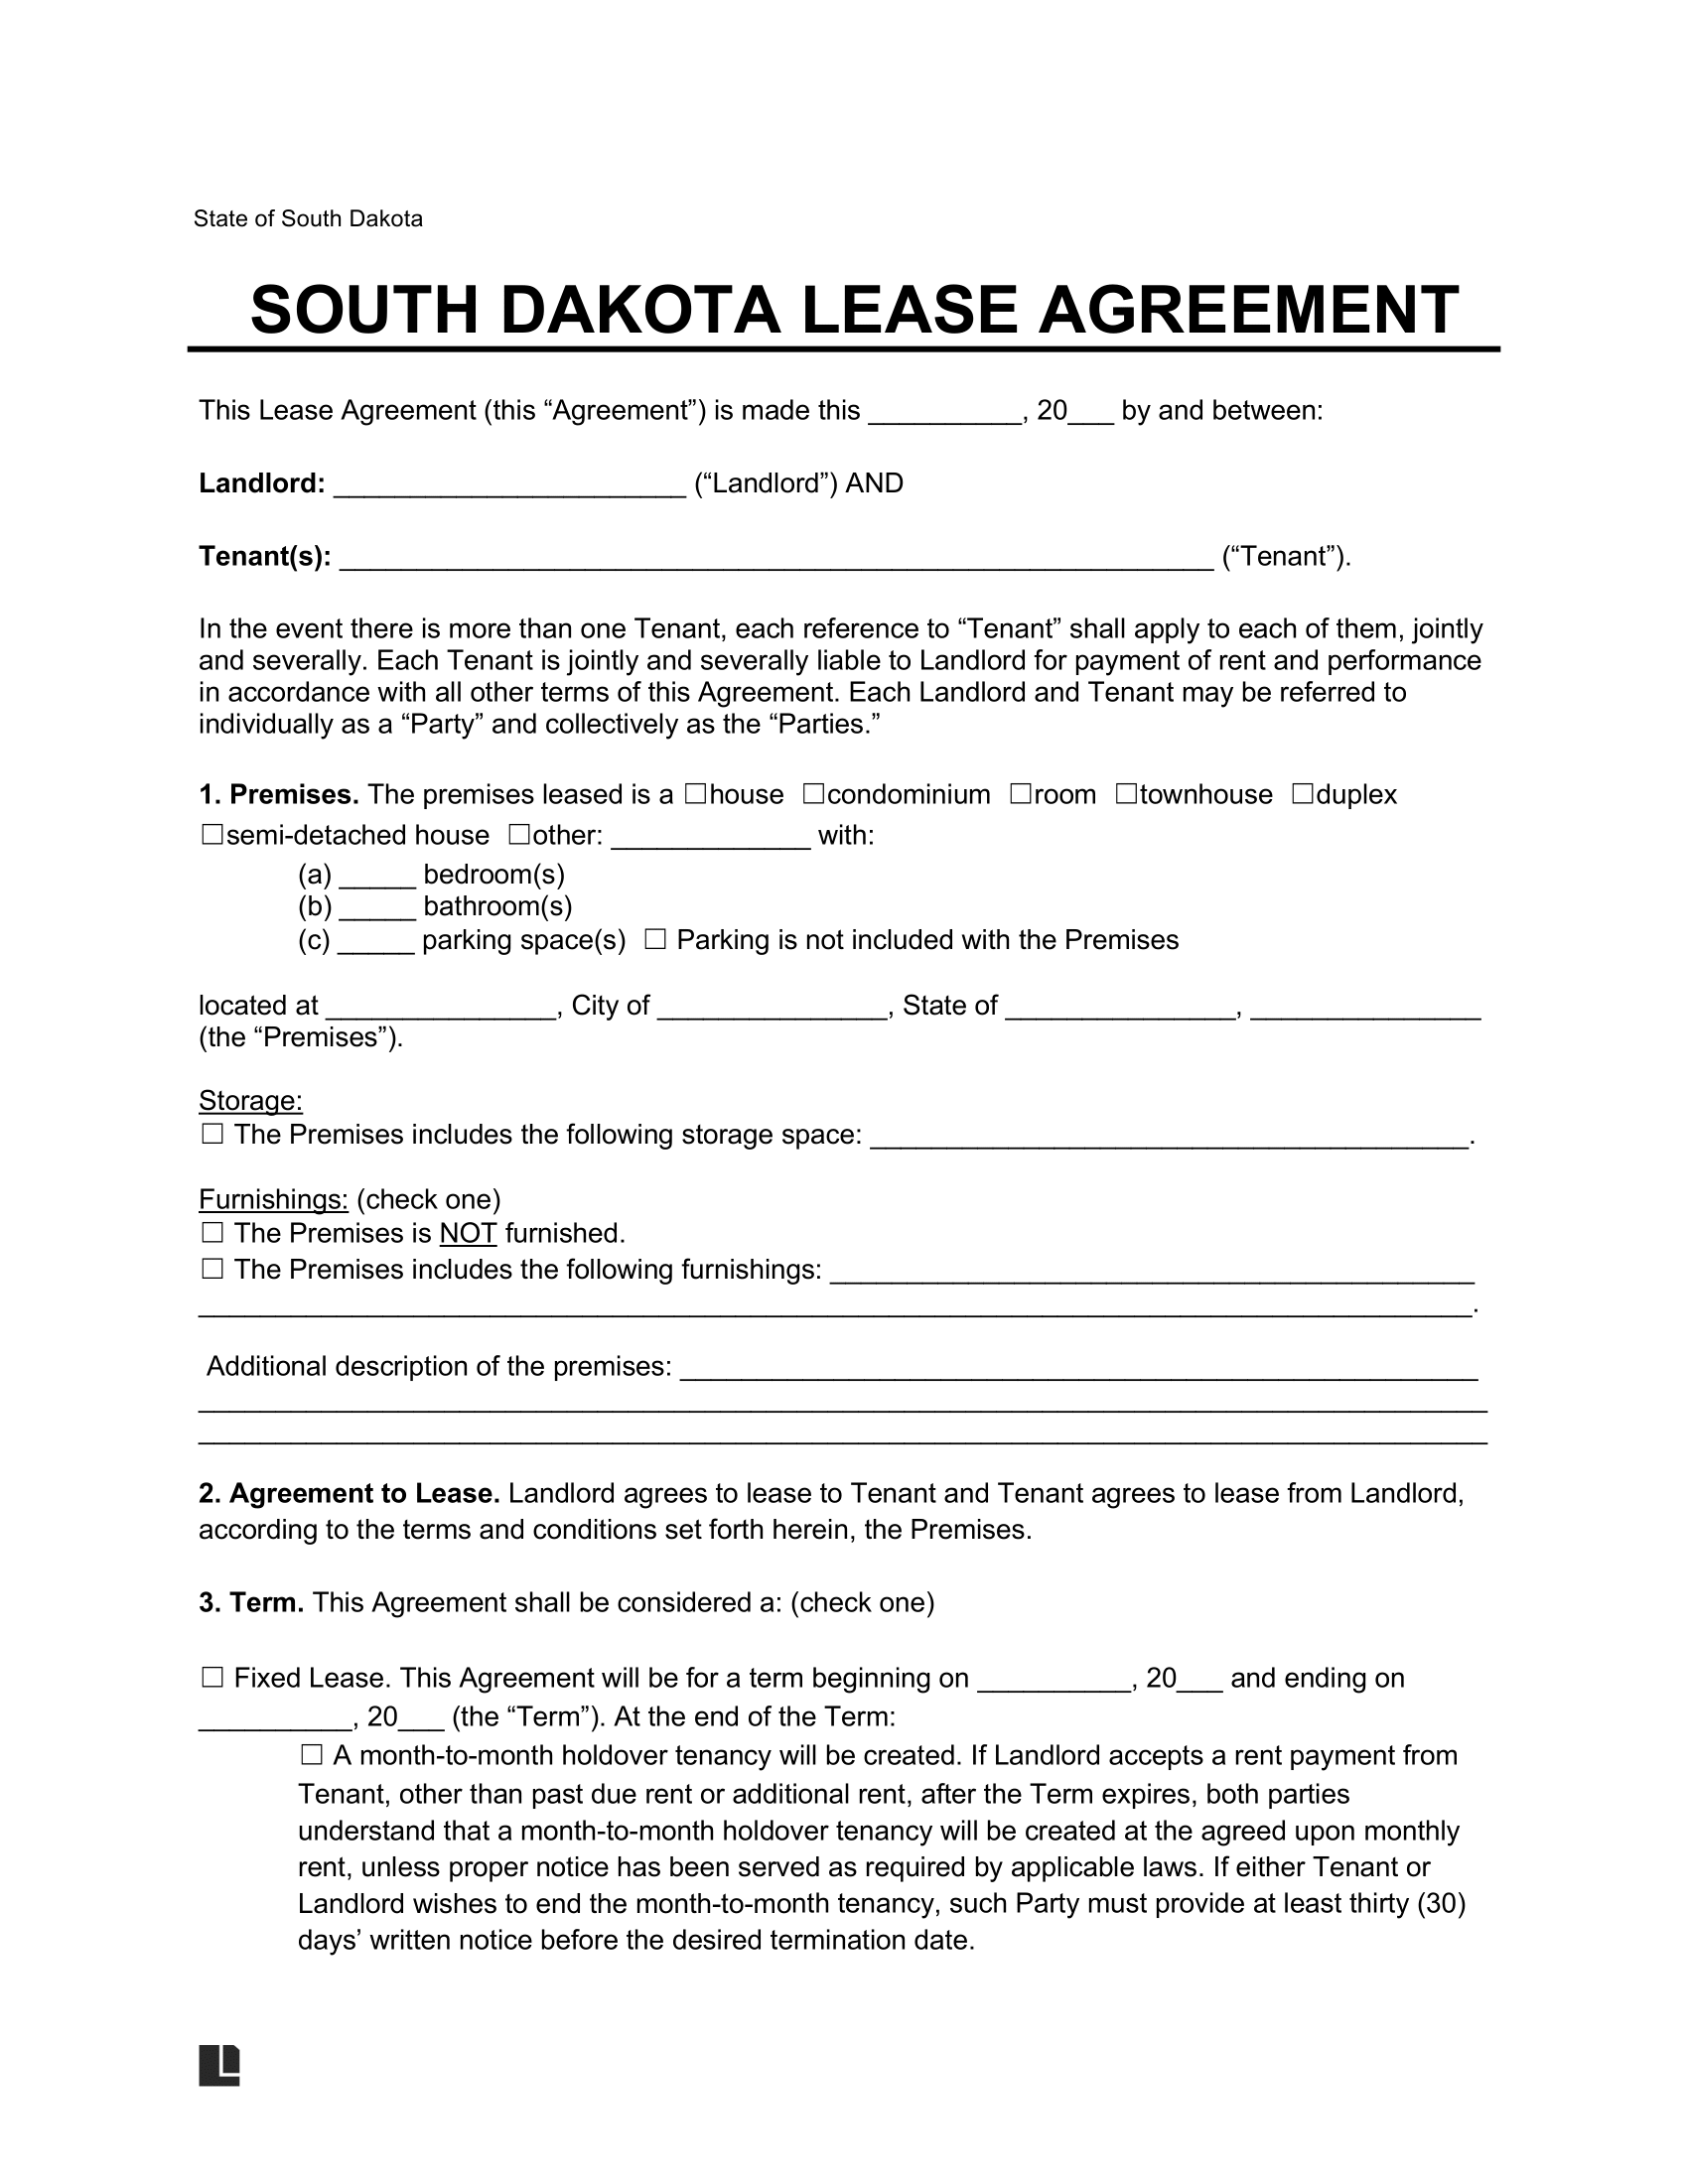 South Dakota Residential Lease Agreement Template